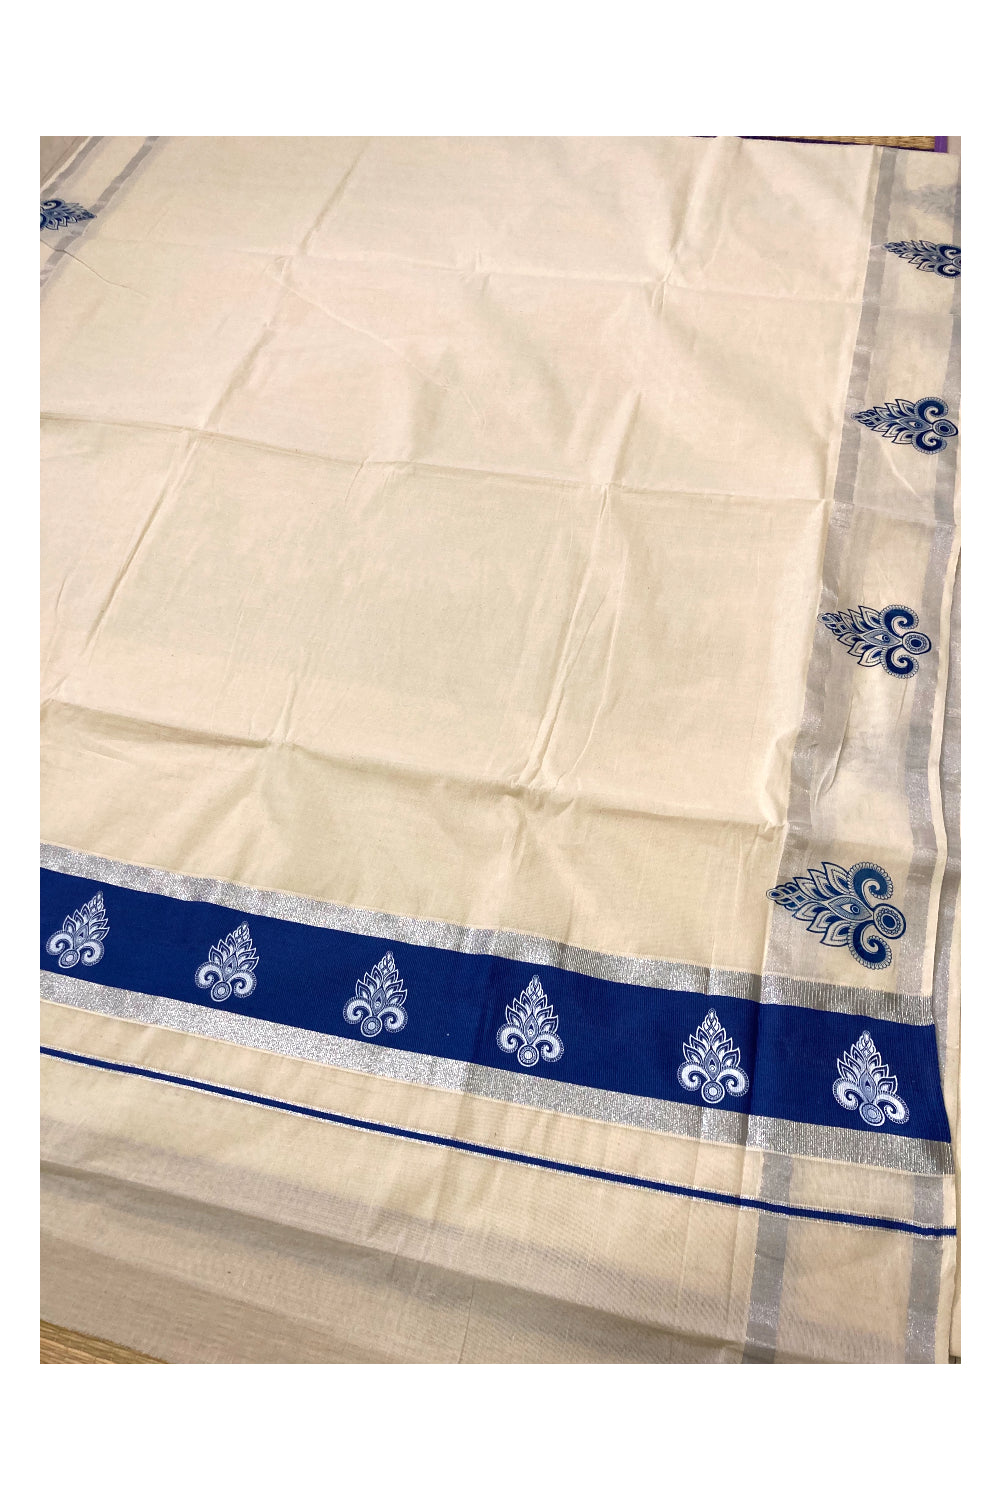 Pure Cotton Kerala Silver Kasavu Saree with White Block Prints in Blue Pallu